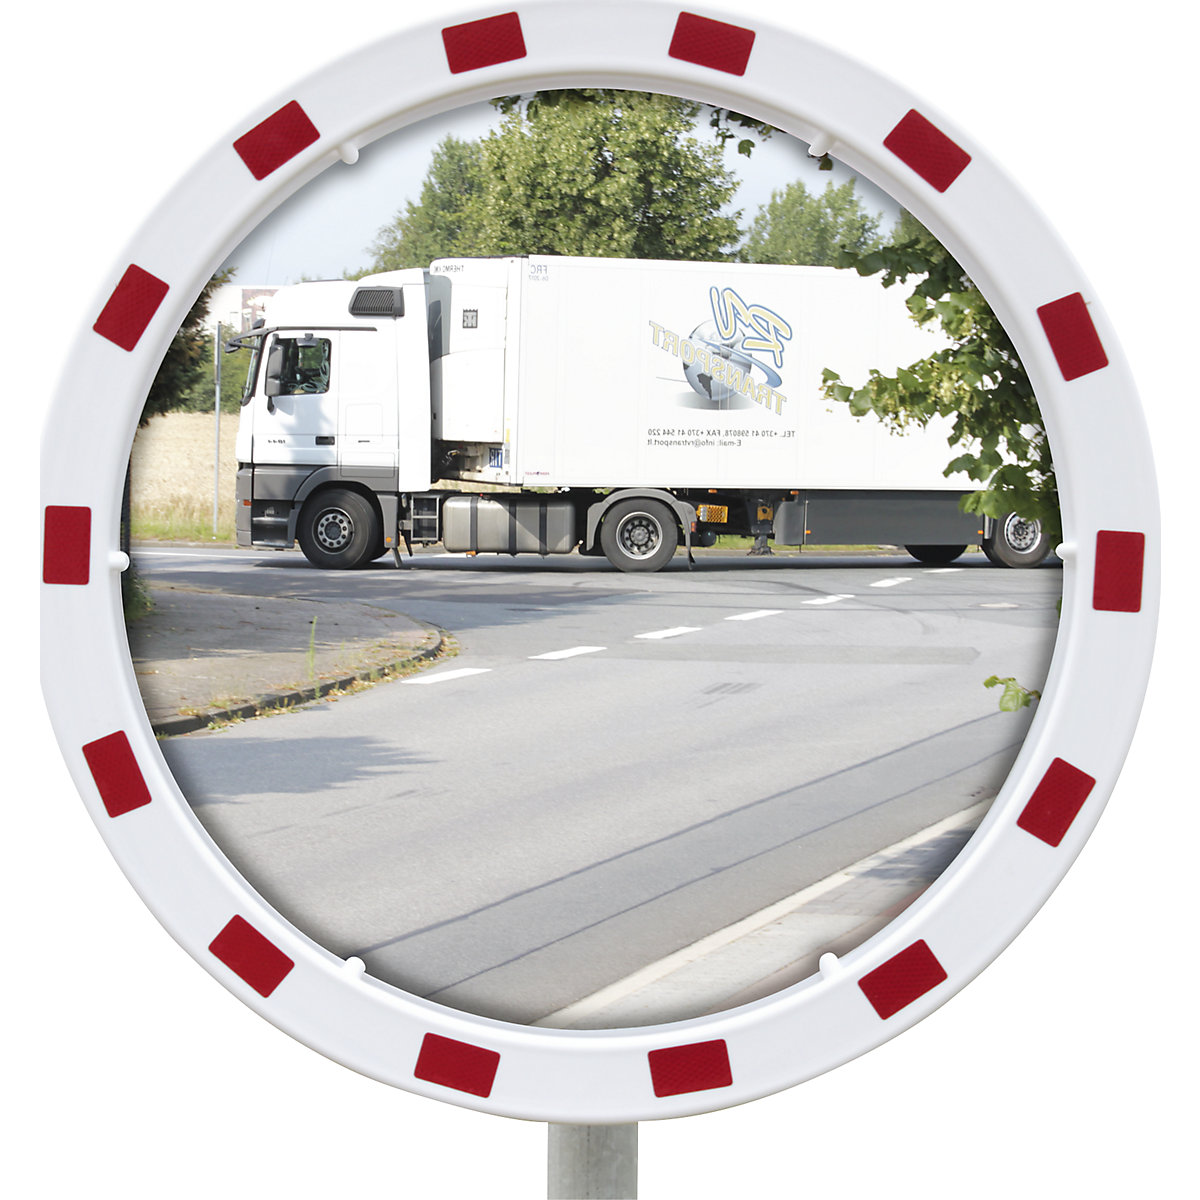 Traffic mirror with universal bracket